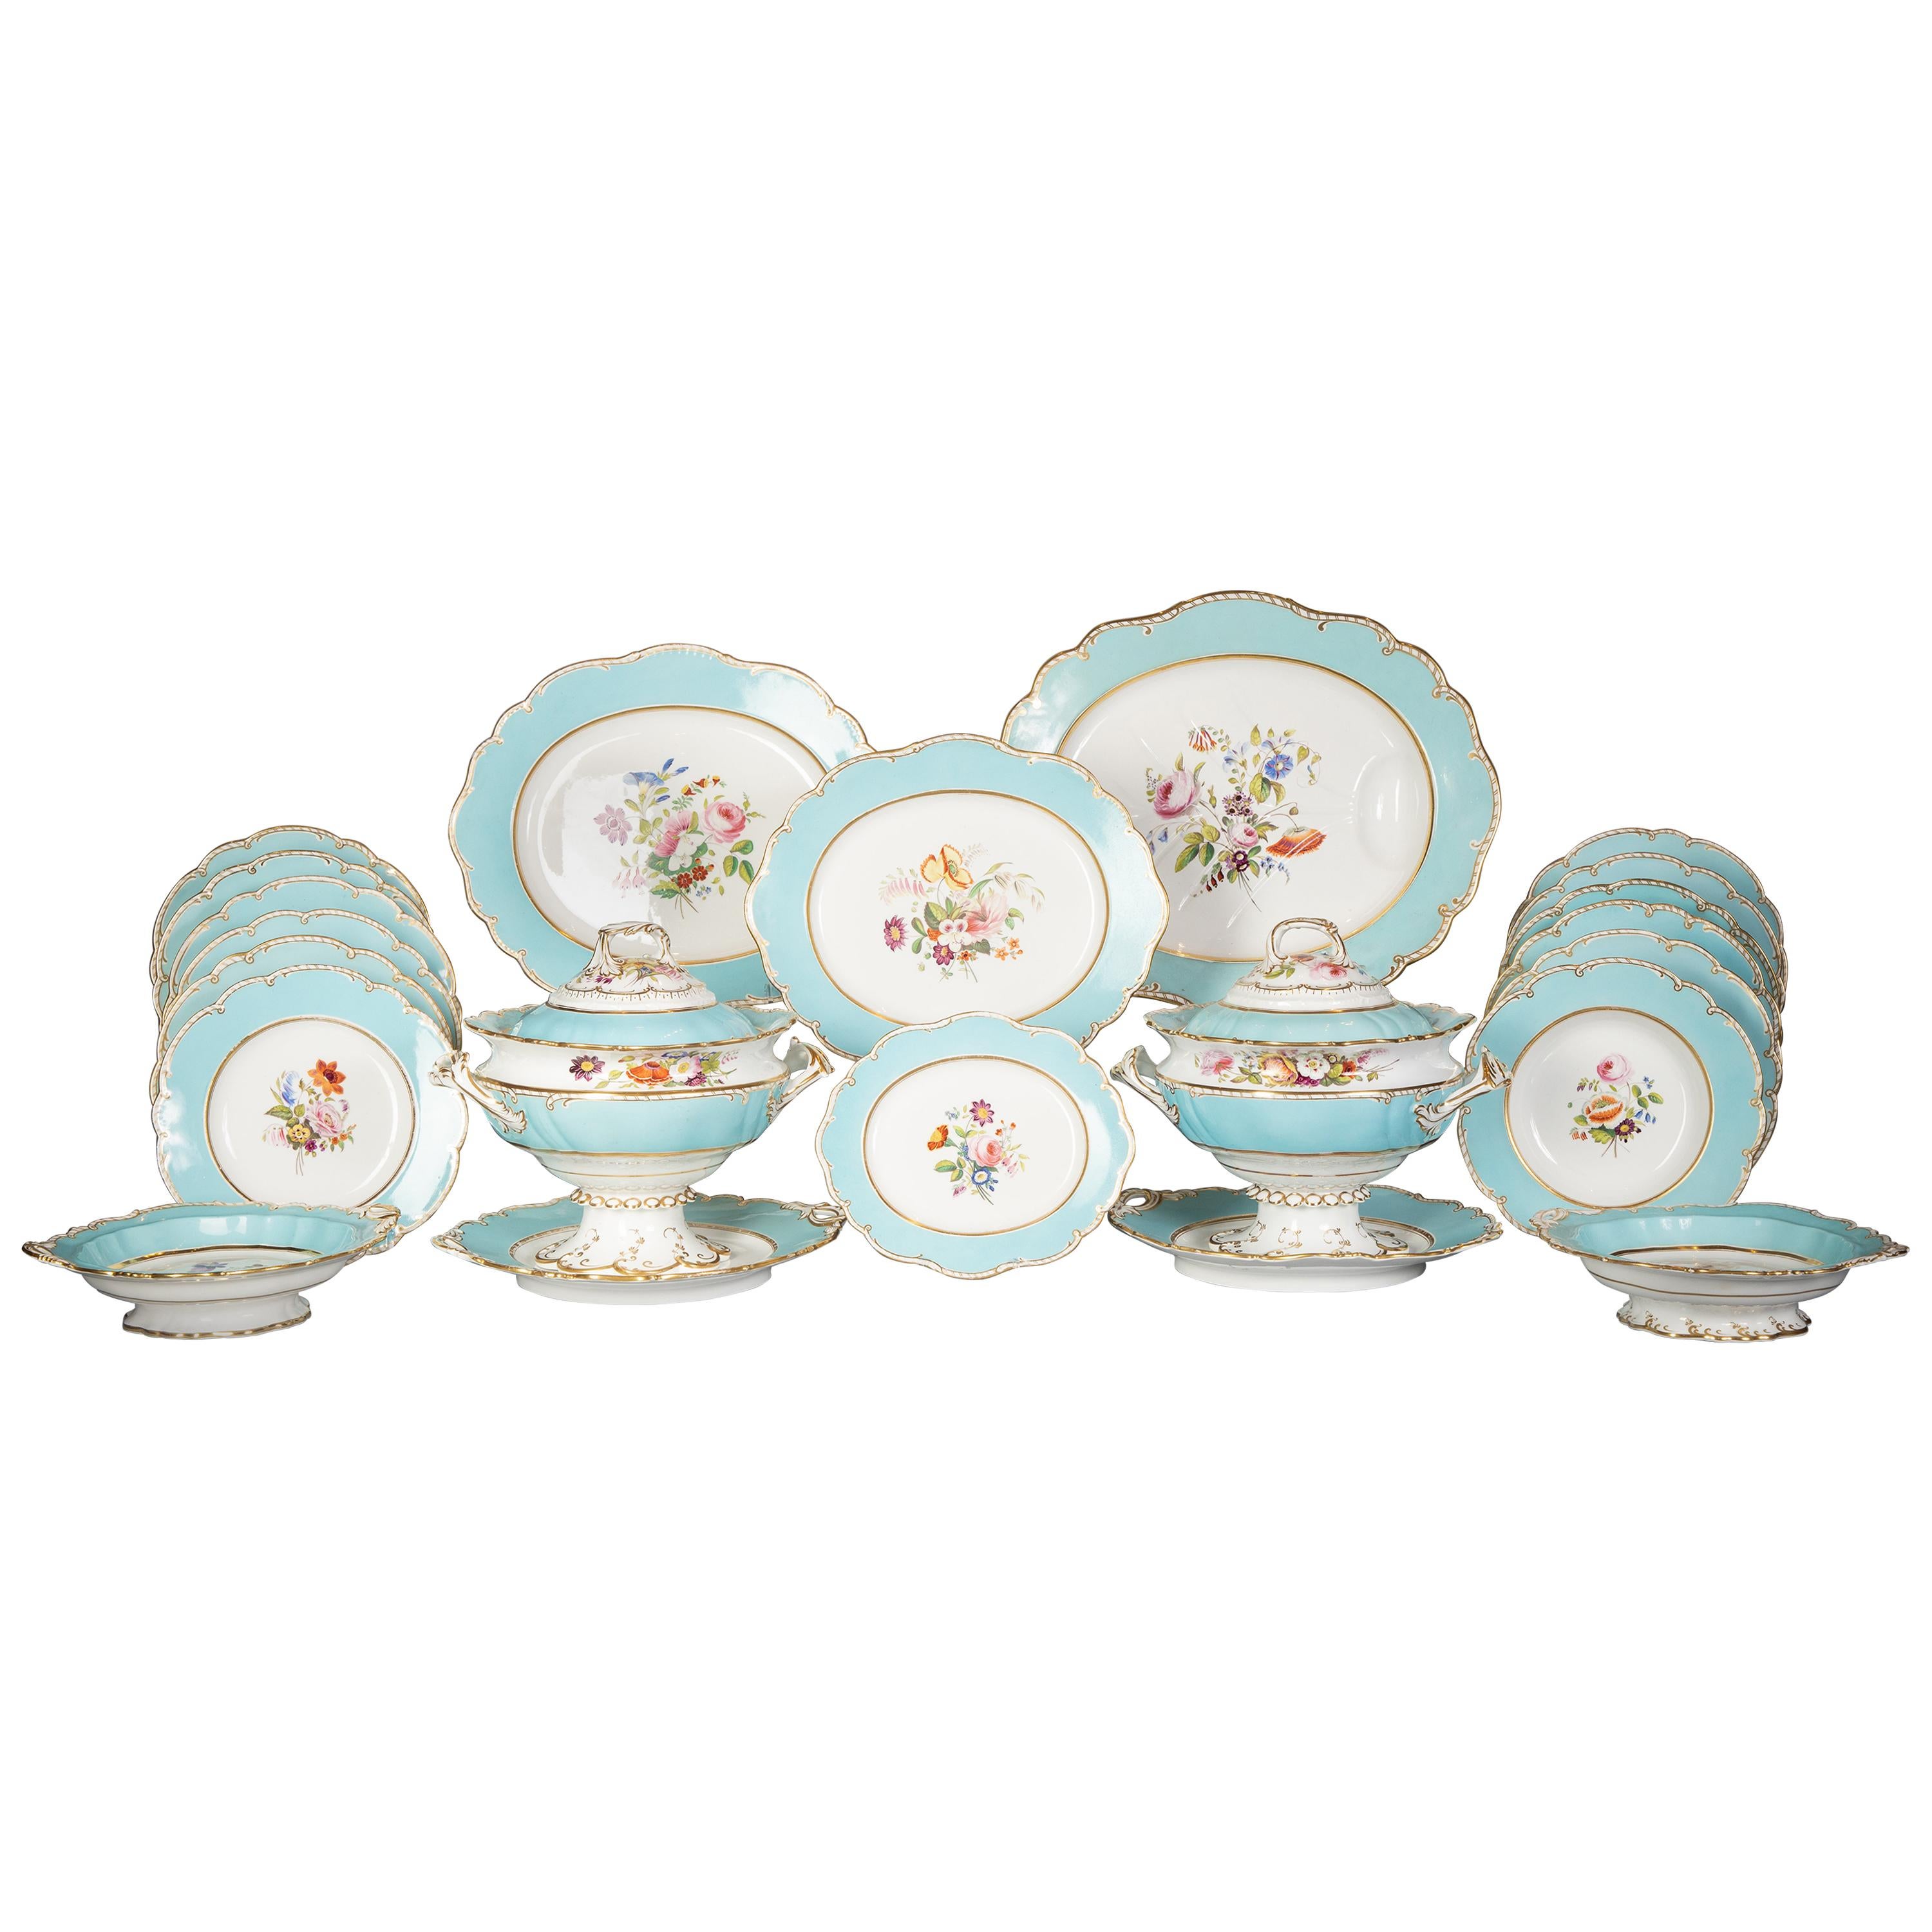 Large English Porcelain Dinner Service, Minton, circa 1845